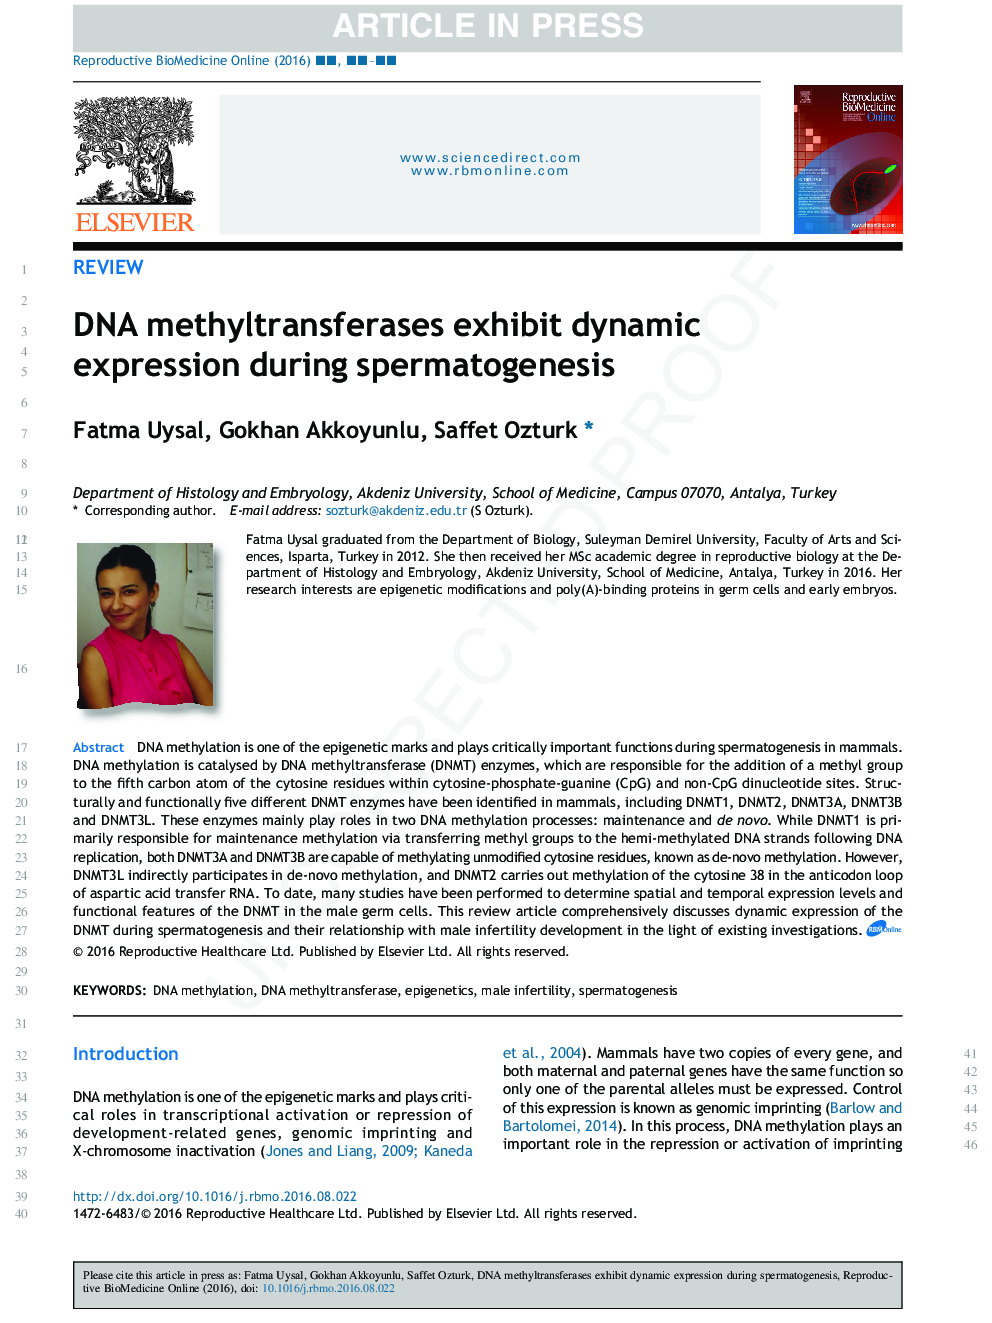 DNA methyltransferases exhibit dynamic expression during spermatogenesis